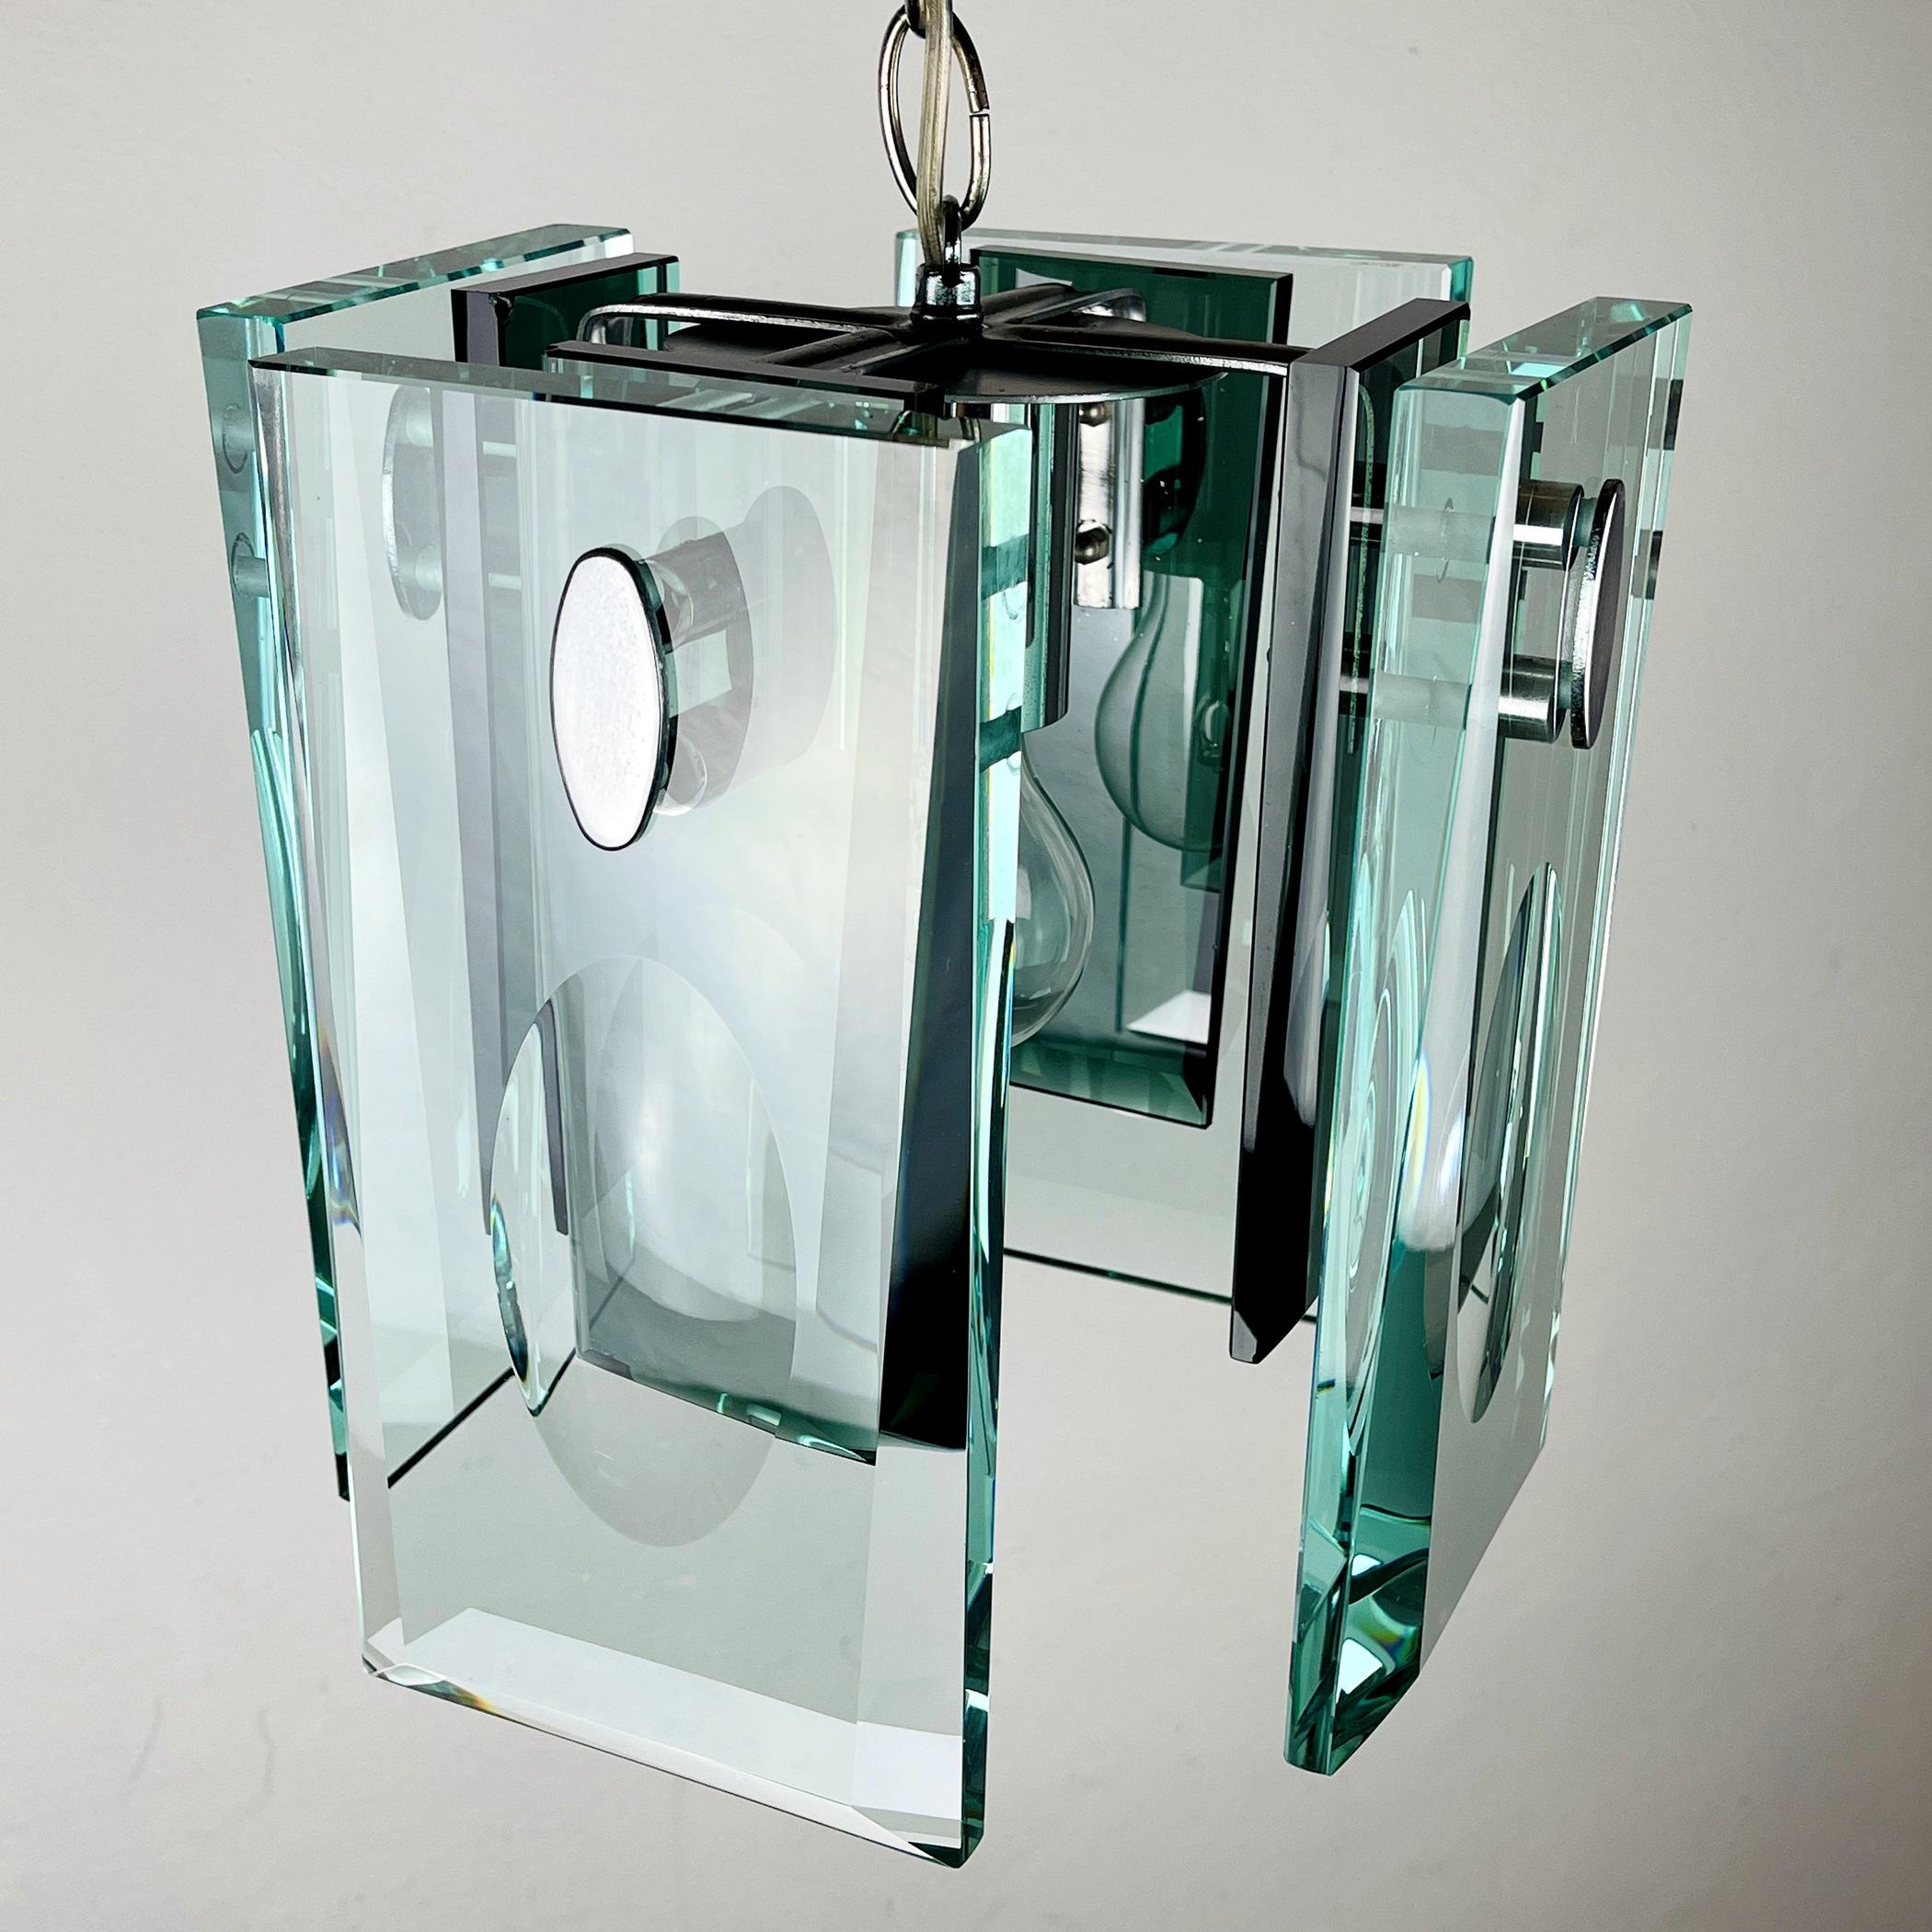 Rare Art Glass Pendant Lamp Italian Design by Fontana Arte Italy 70s For Sale 4